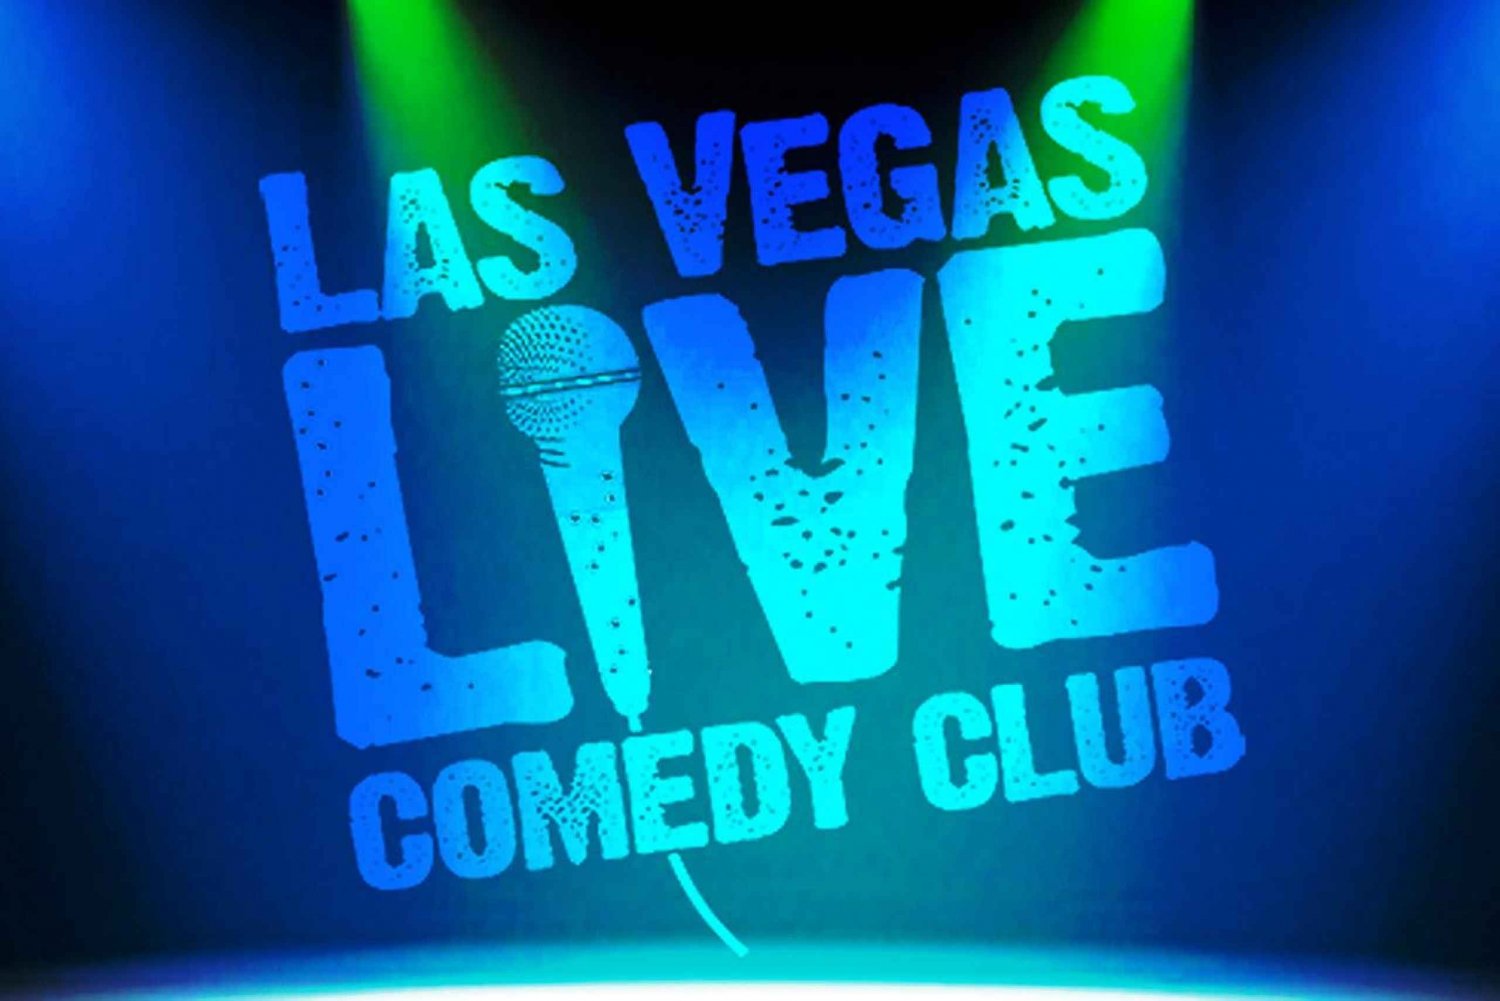 Las Vegas: Live Comedy Club Kaartjes